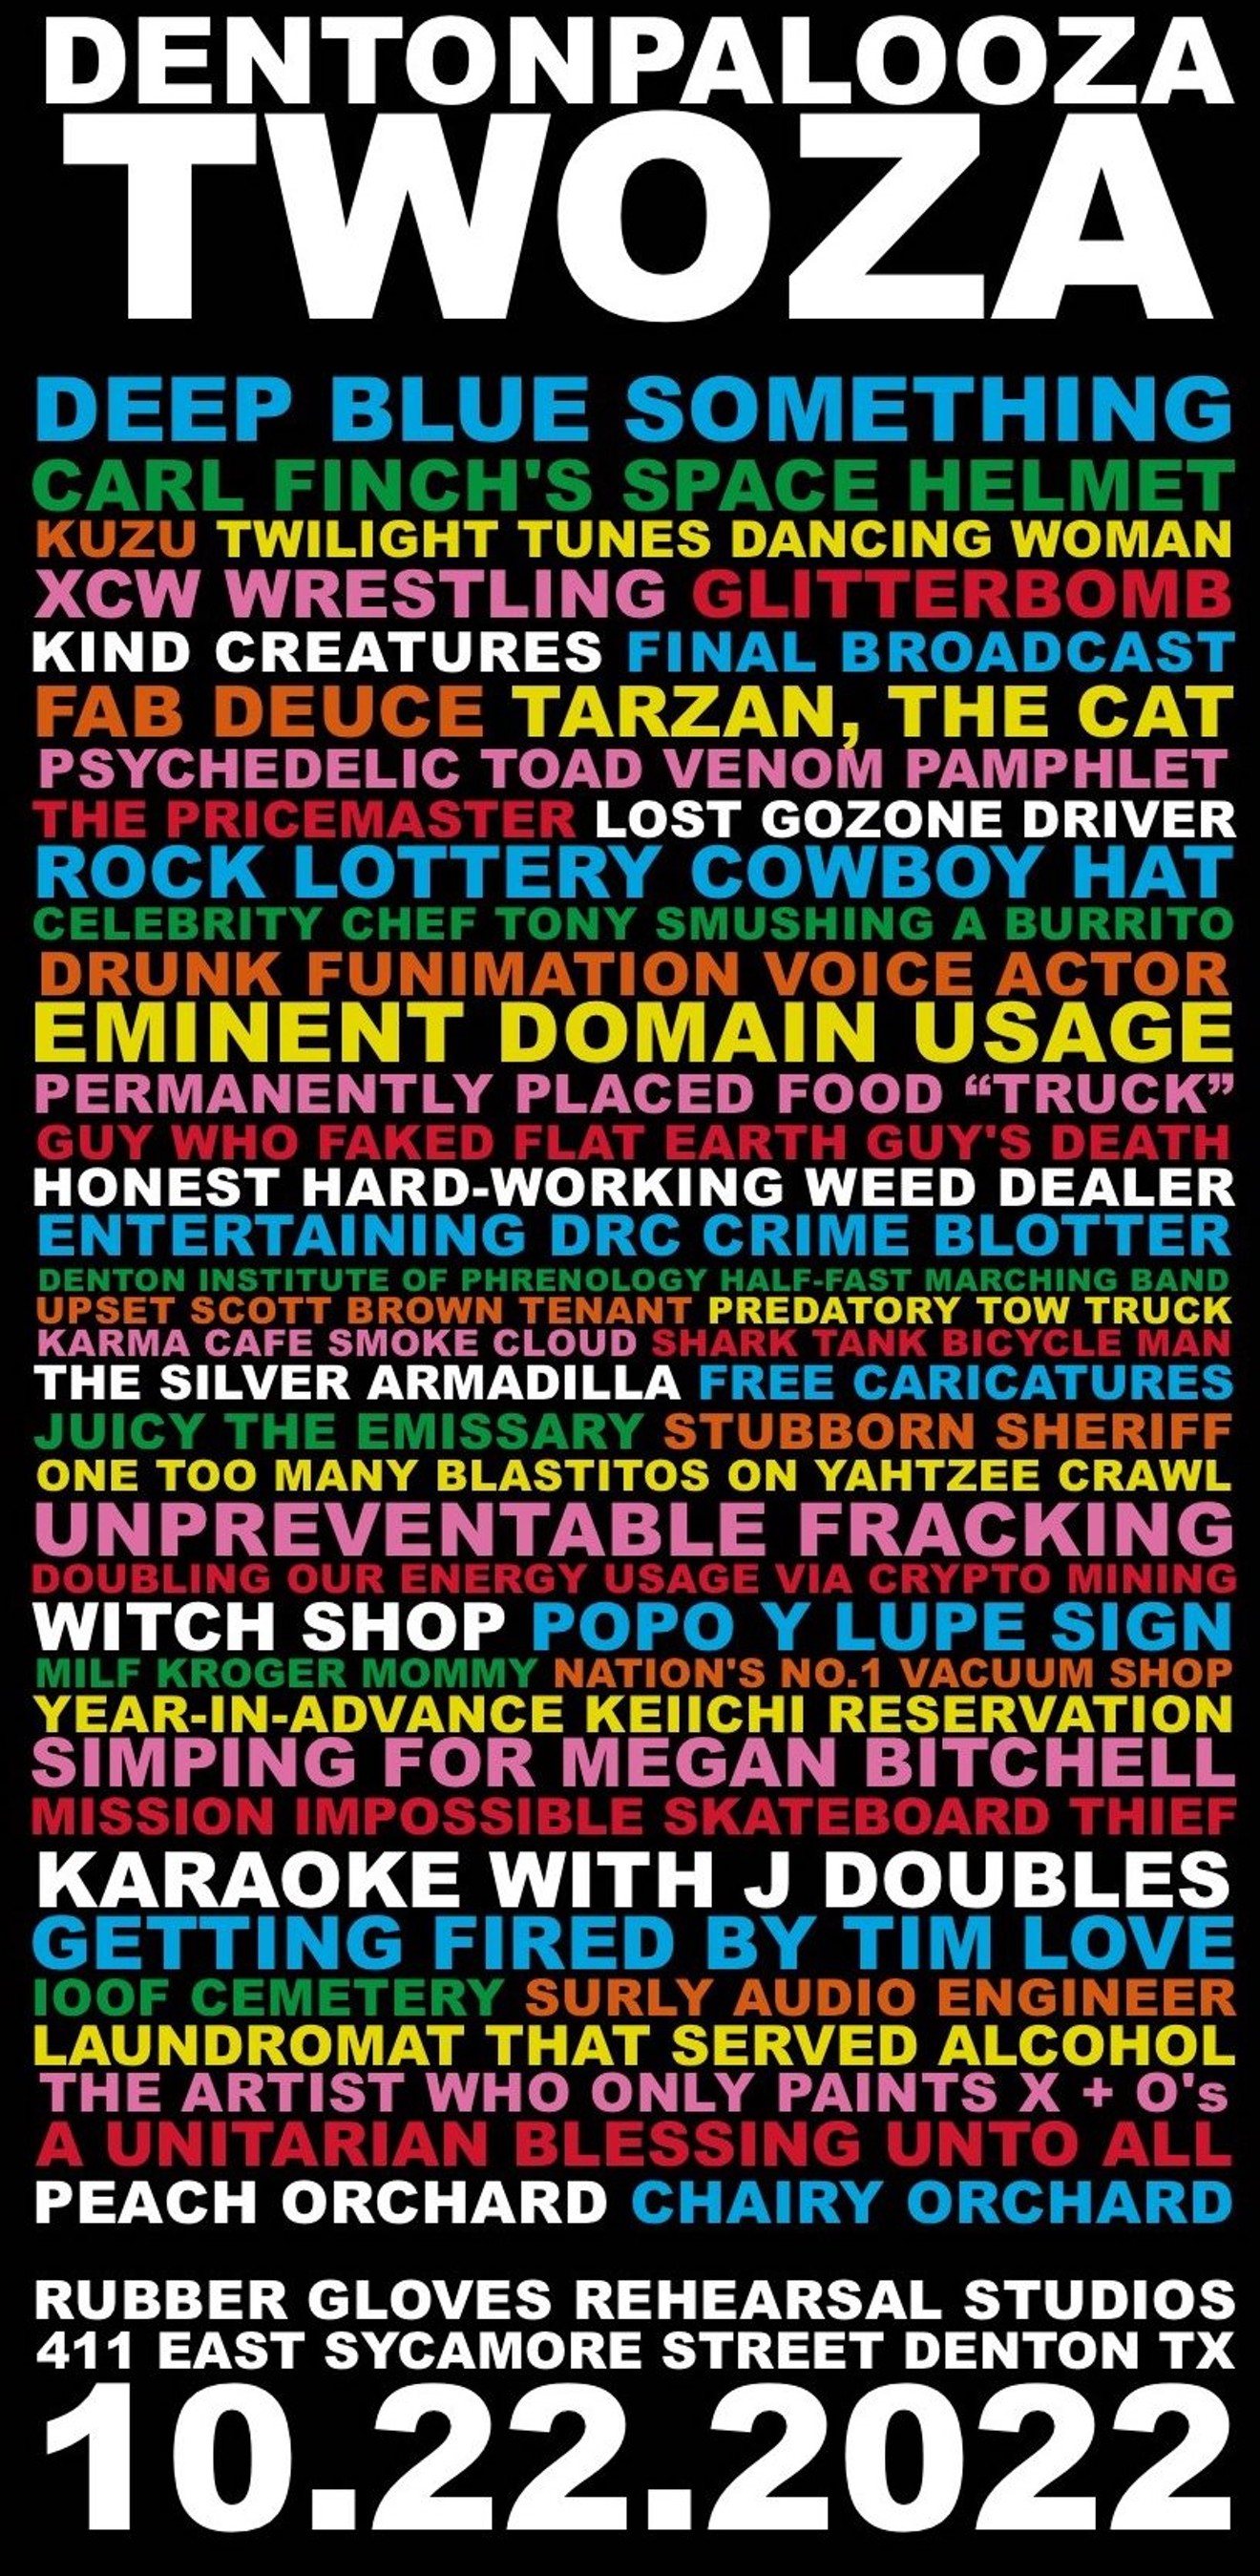 Dentonpalooza Twoza's poster is full of inside jokes, wacky characters and local bands.